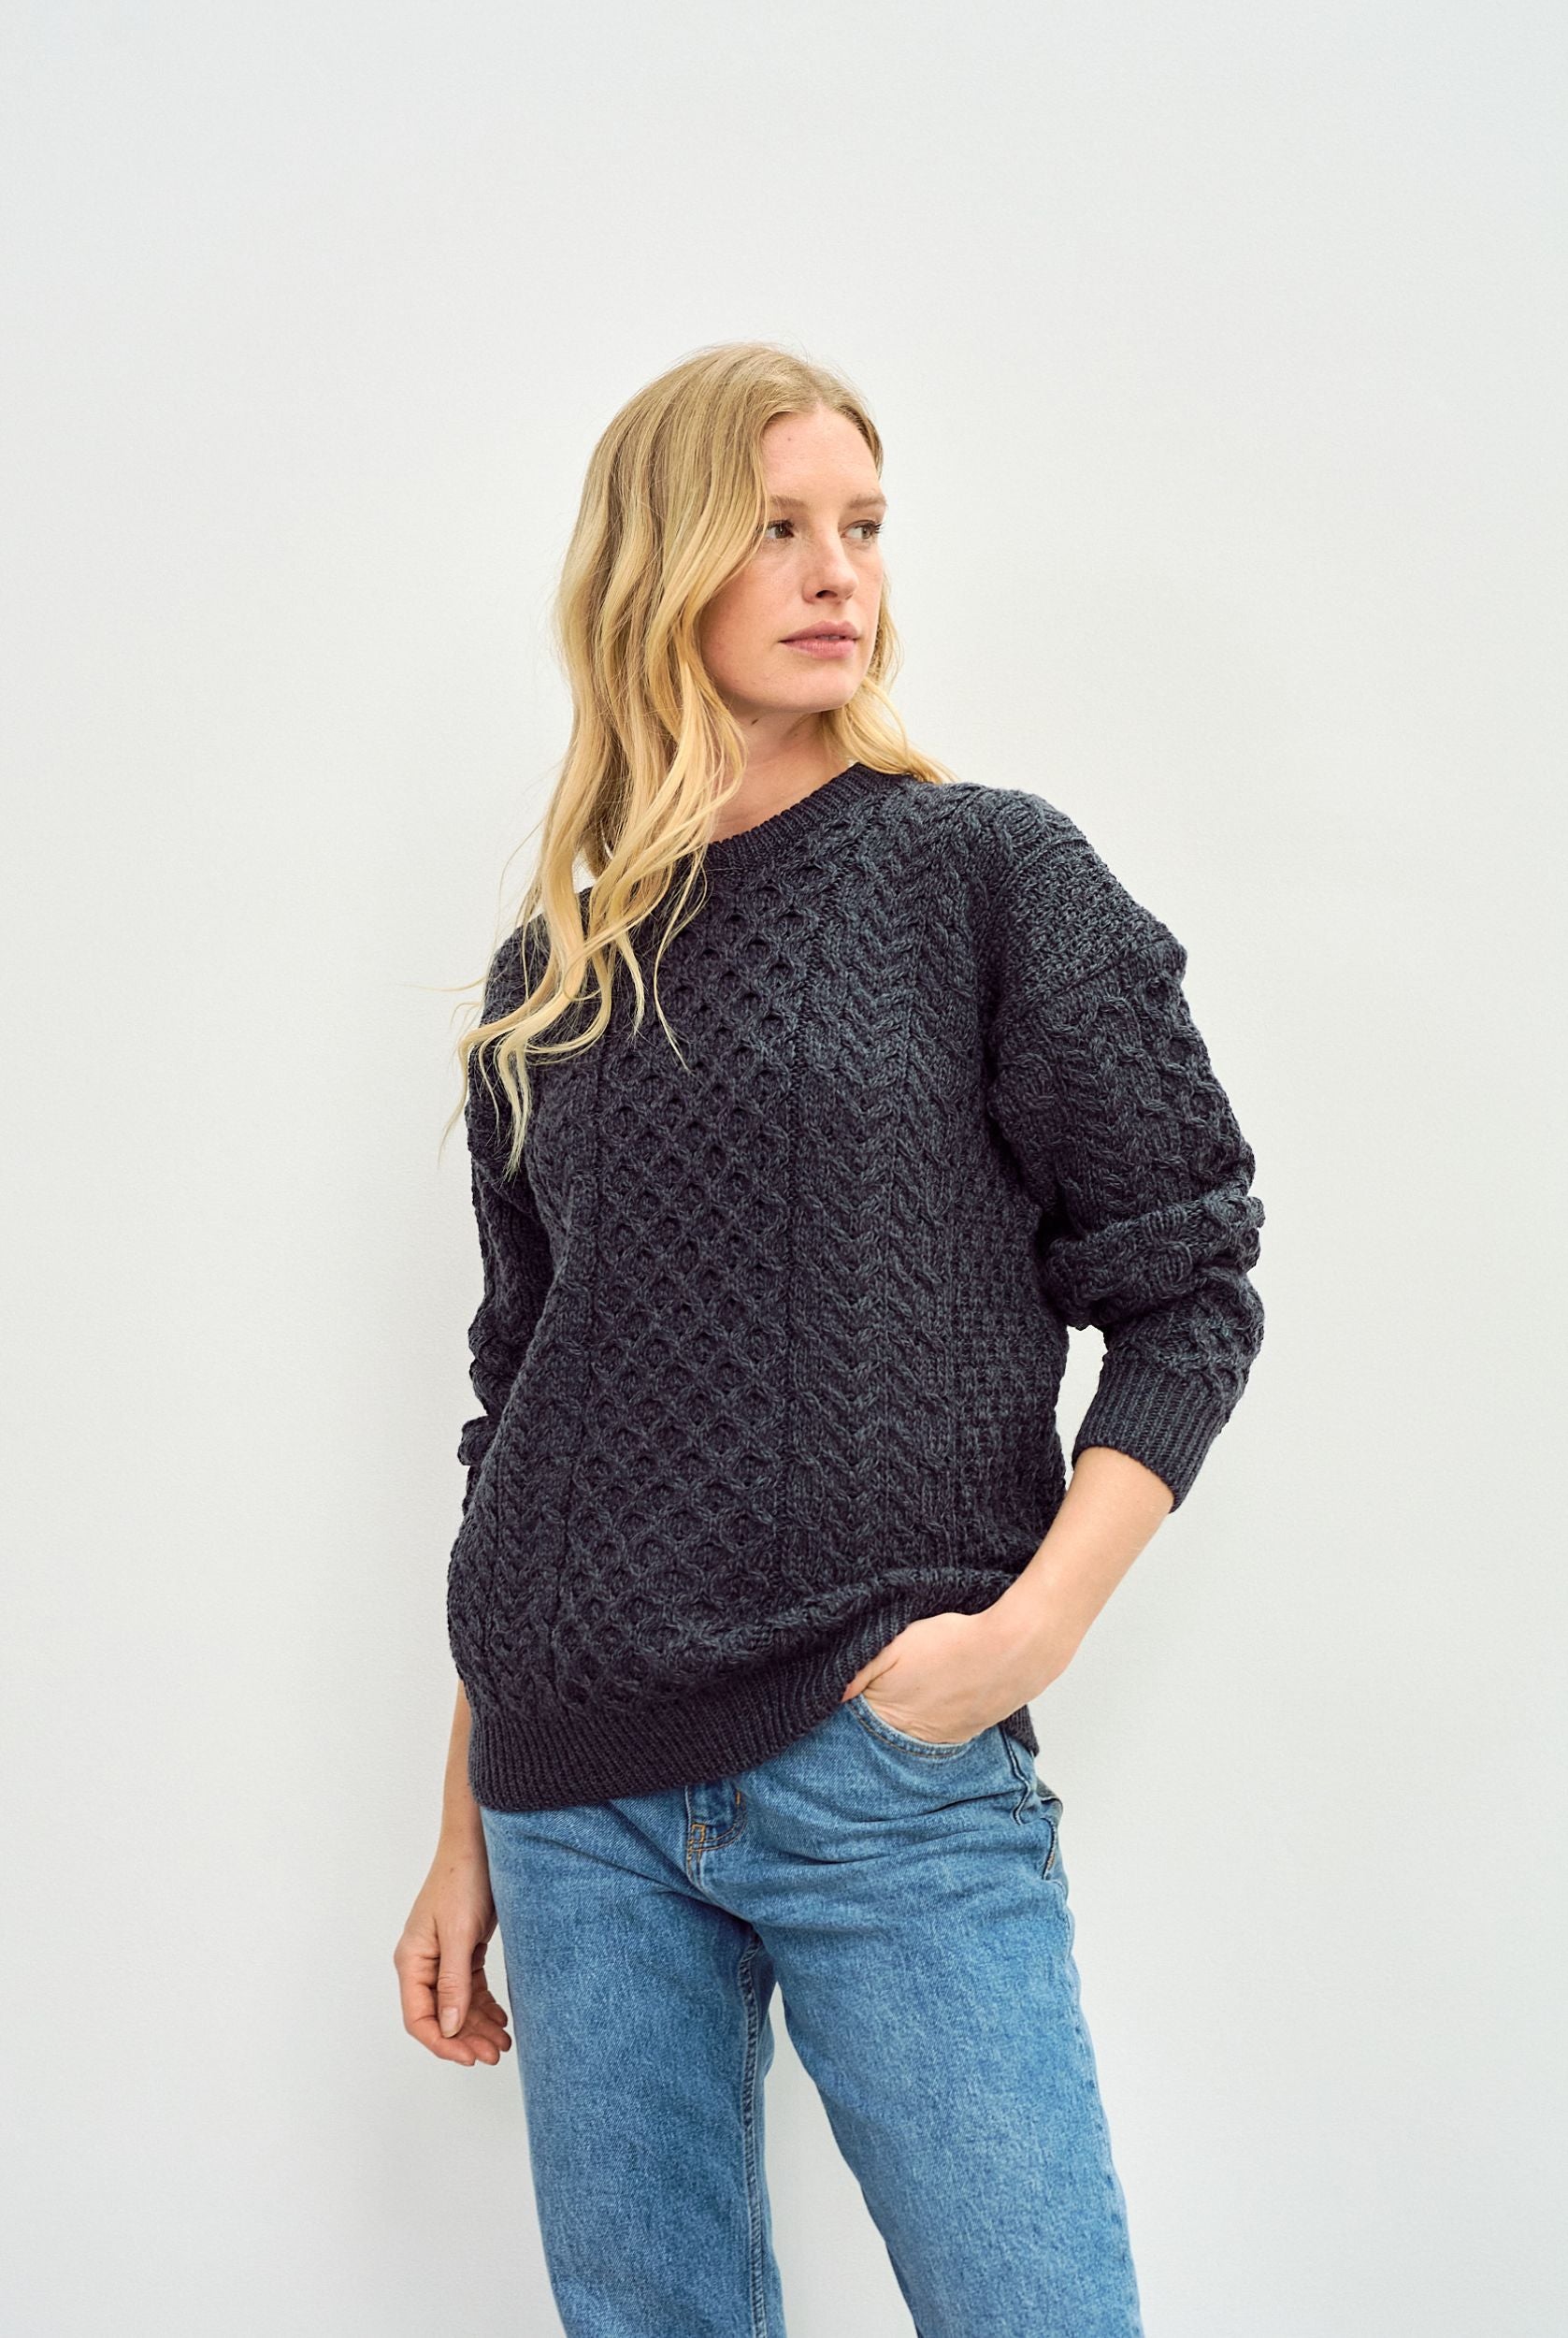 Inisheer Charcoal Traditional Aran Womens Sweater | Aran Woollen Mills